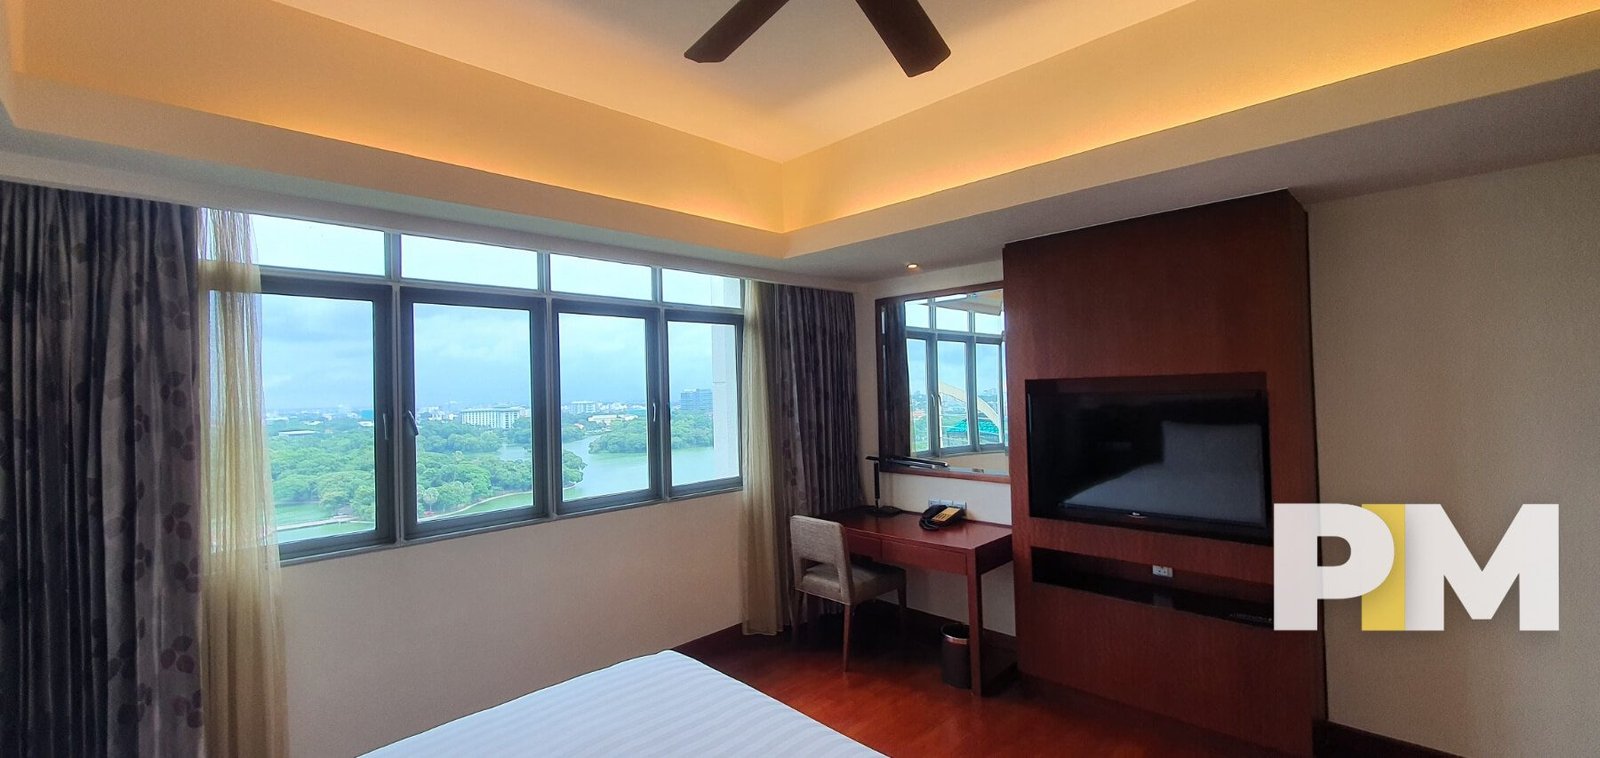 Bedroom with windows - Property in Yangon